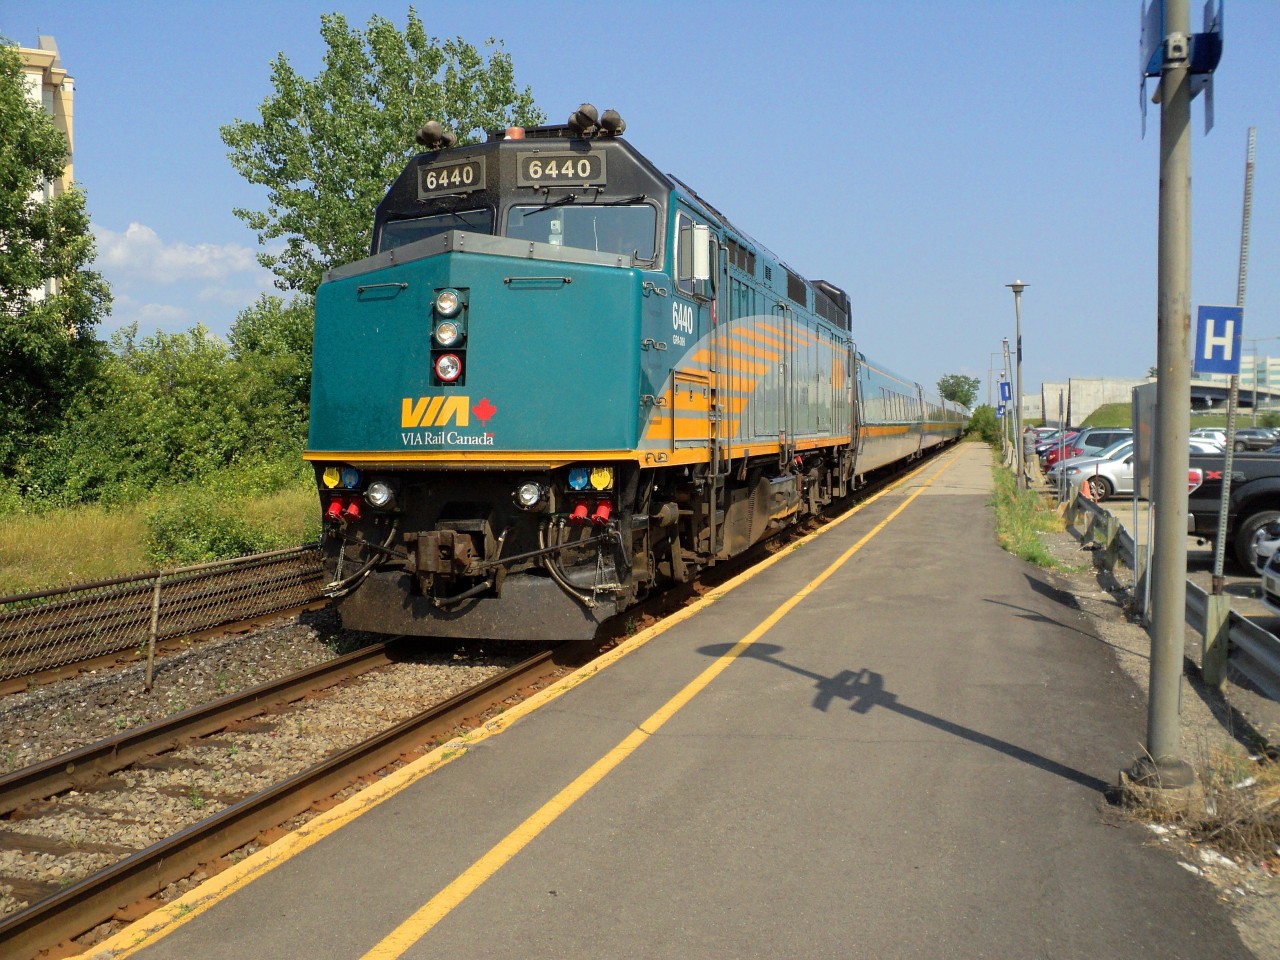 VIA Rail route 57Montréal Kingston Toronto Aldersoht arriving in Dorvalat 15hr 24